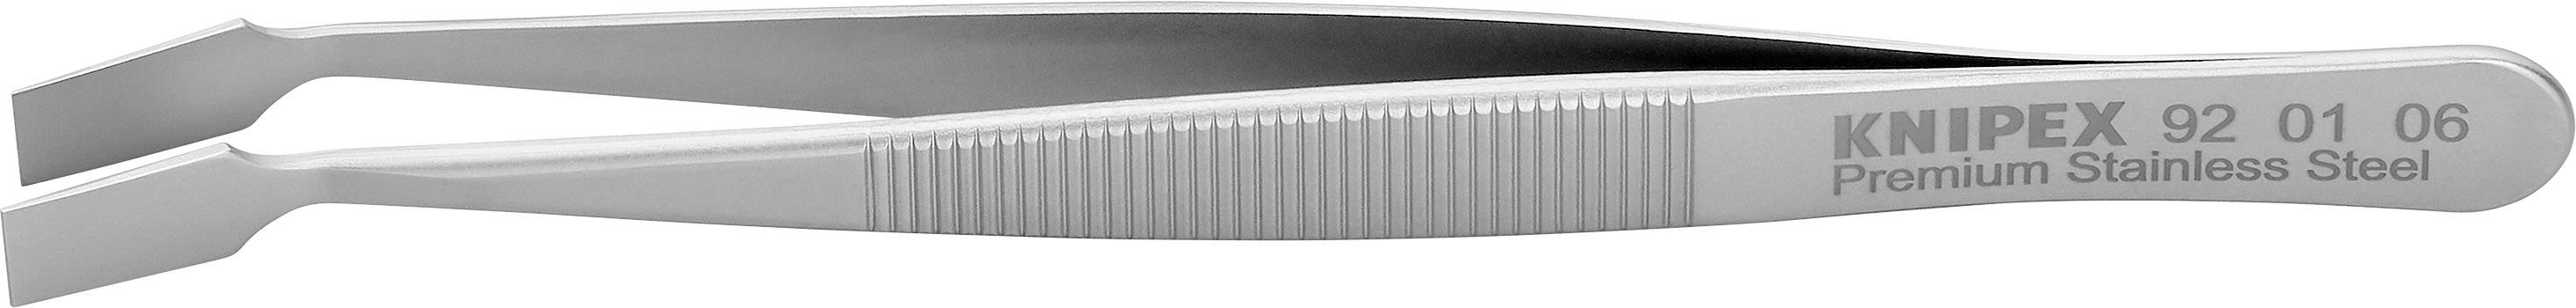 KNIPEX 92 01 06 Universalpinzette 1 Stück Stumpf 120 mm